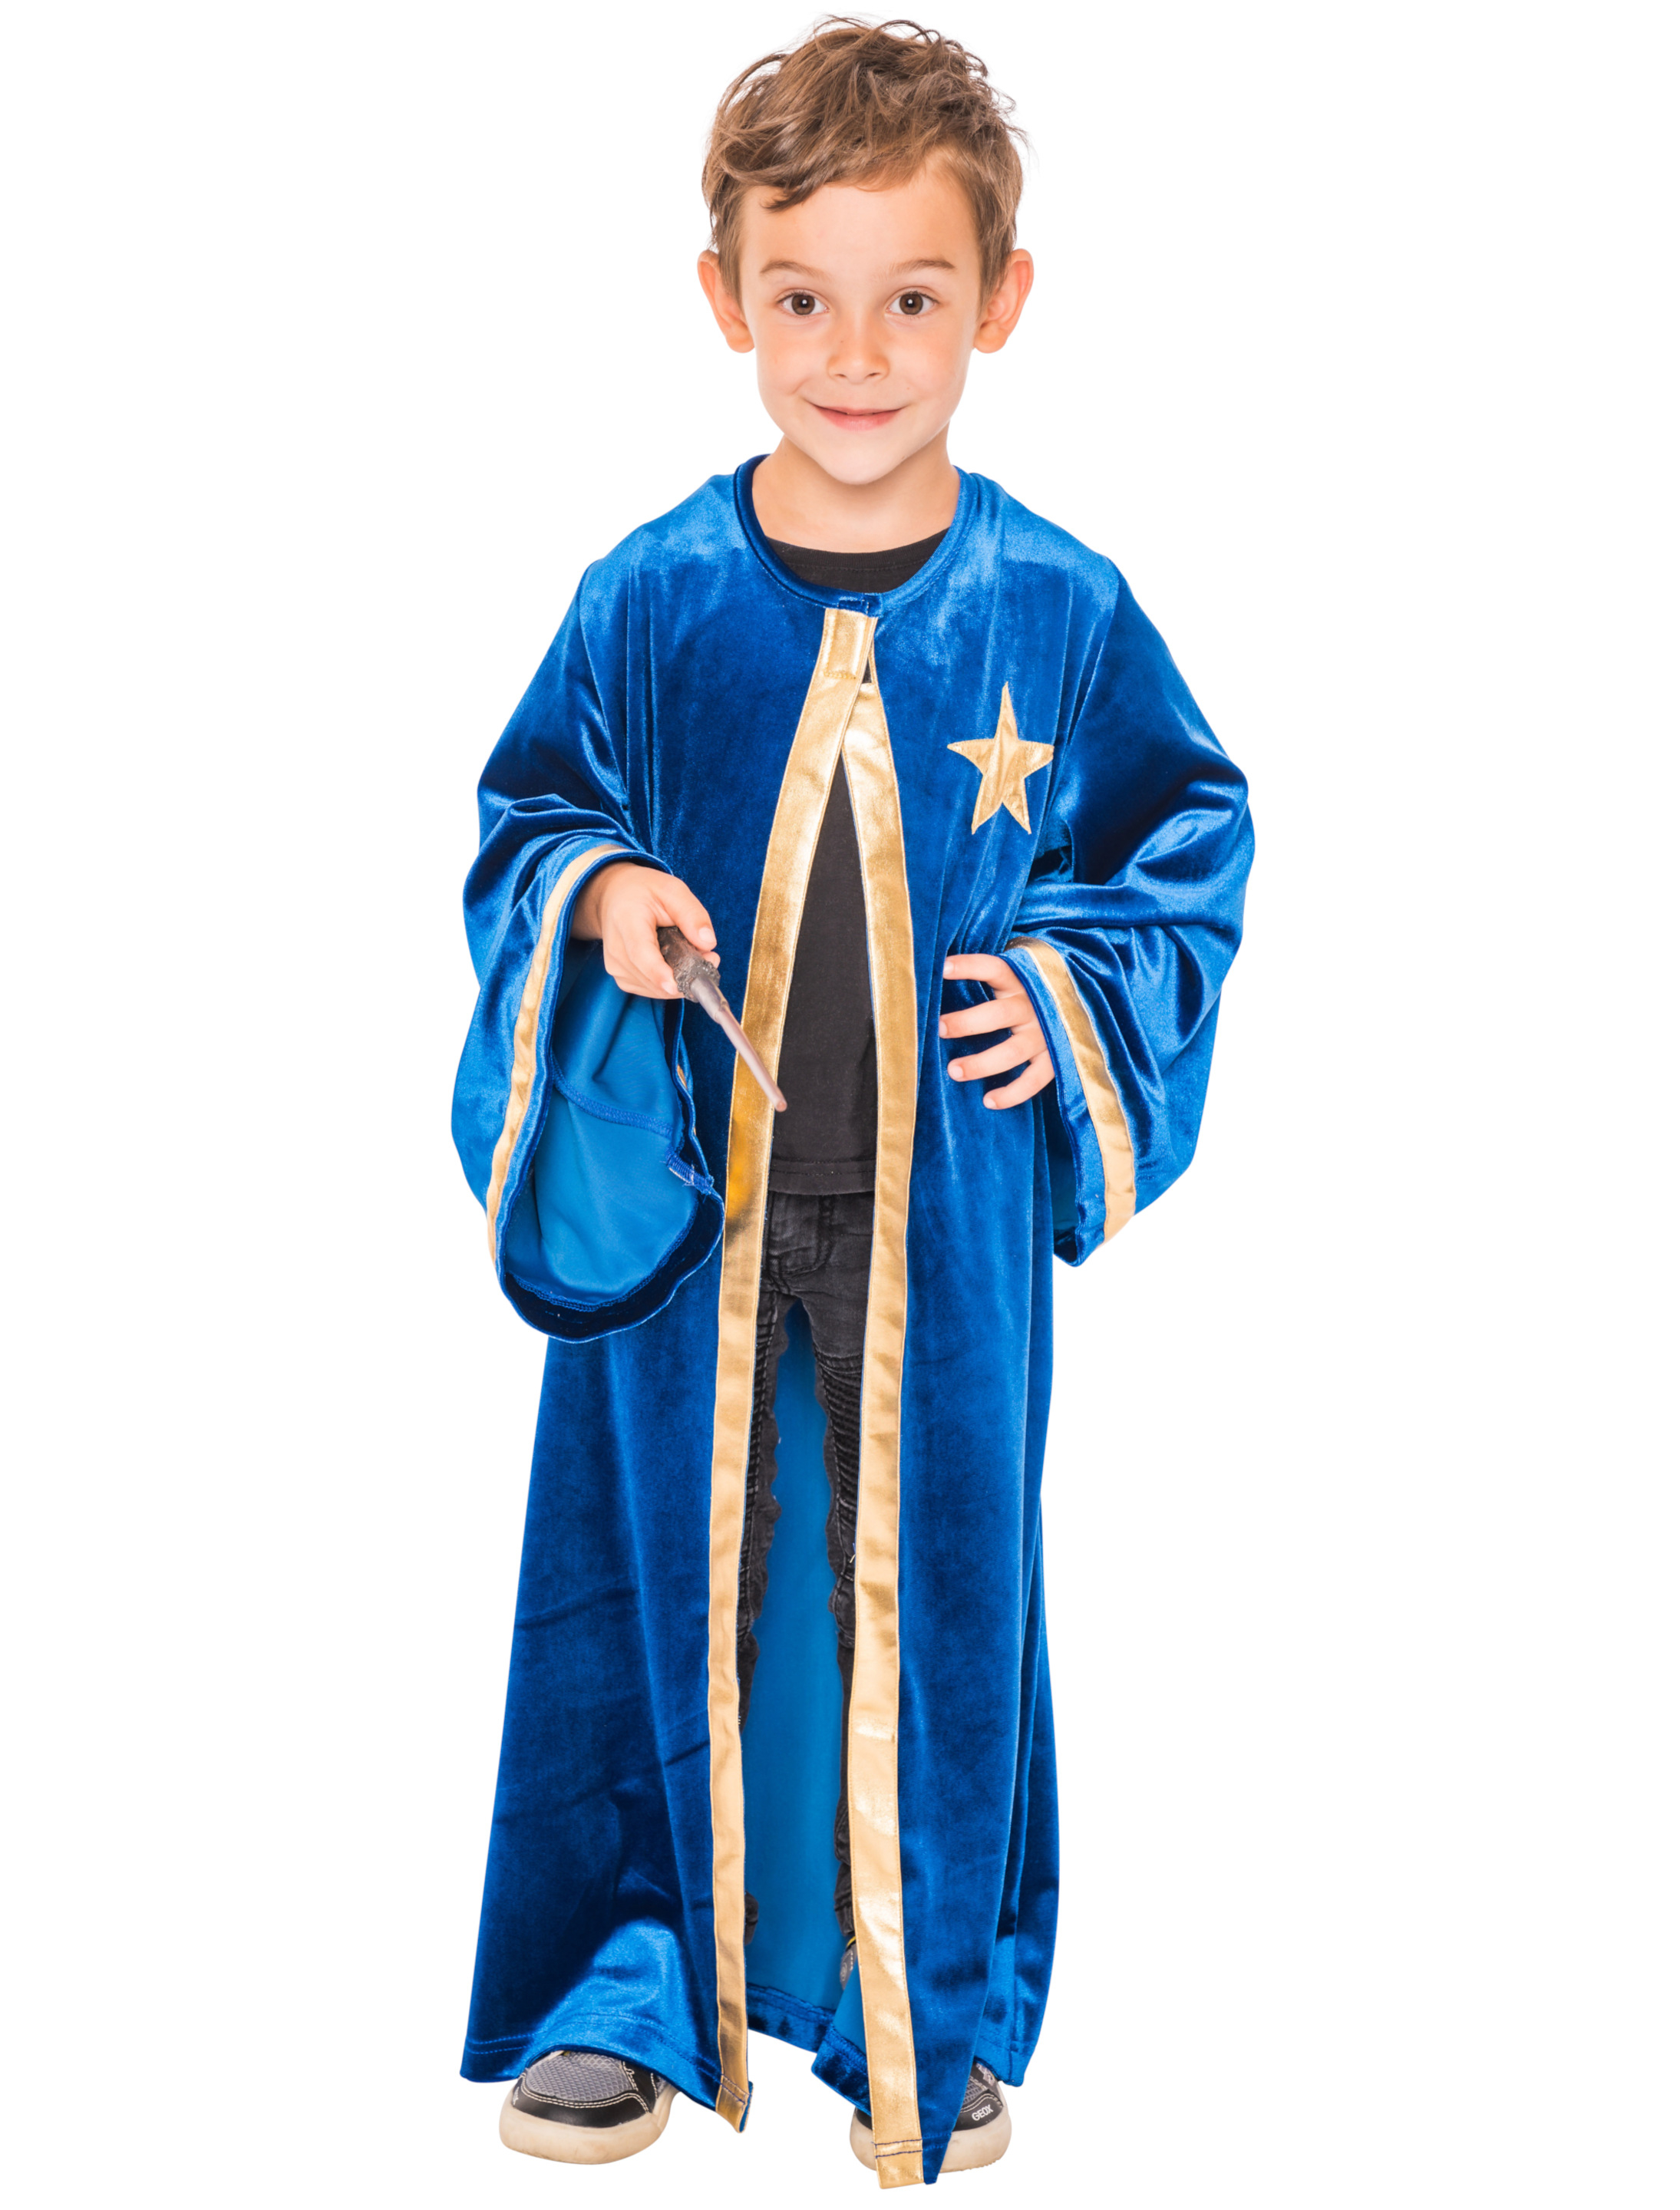 Mantel Zauberer Kinder blau 140